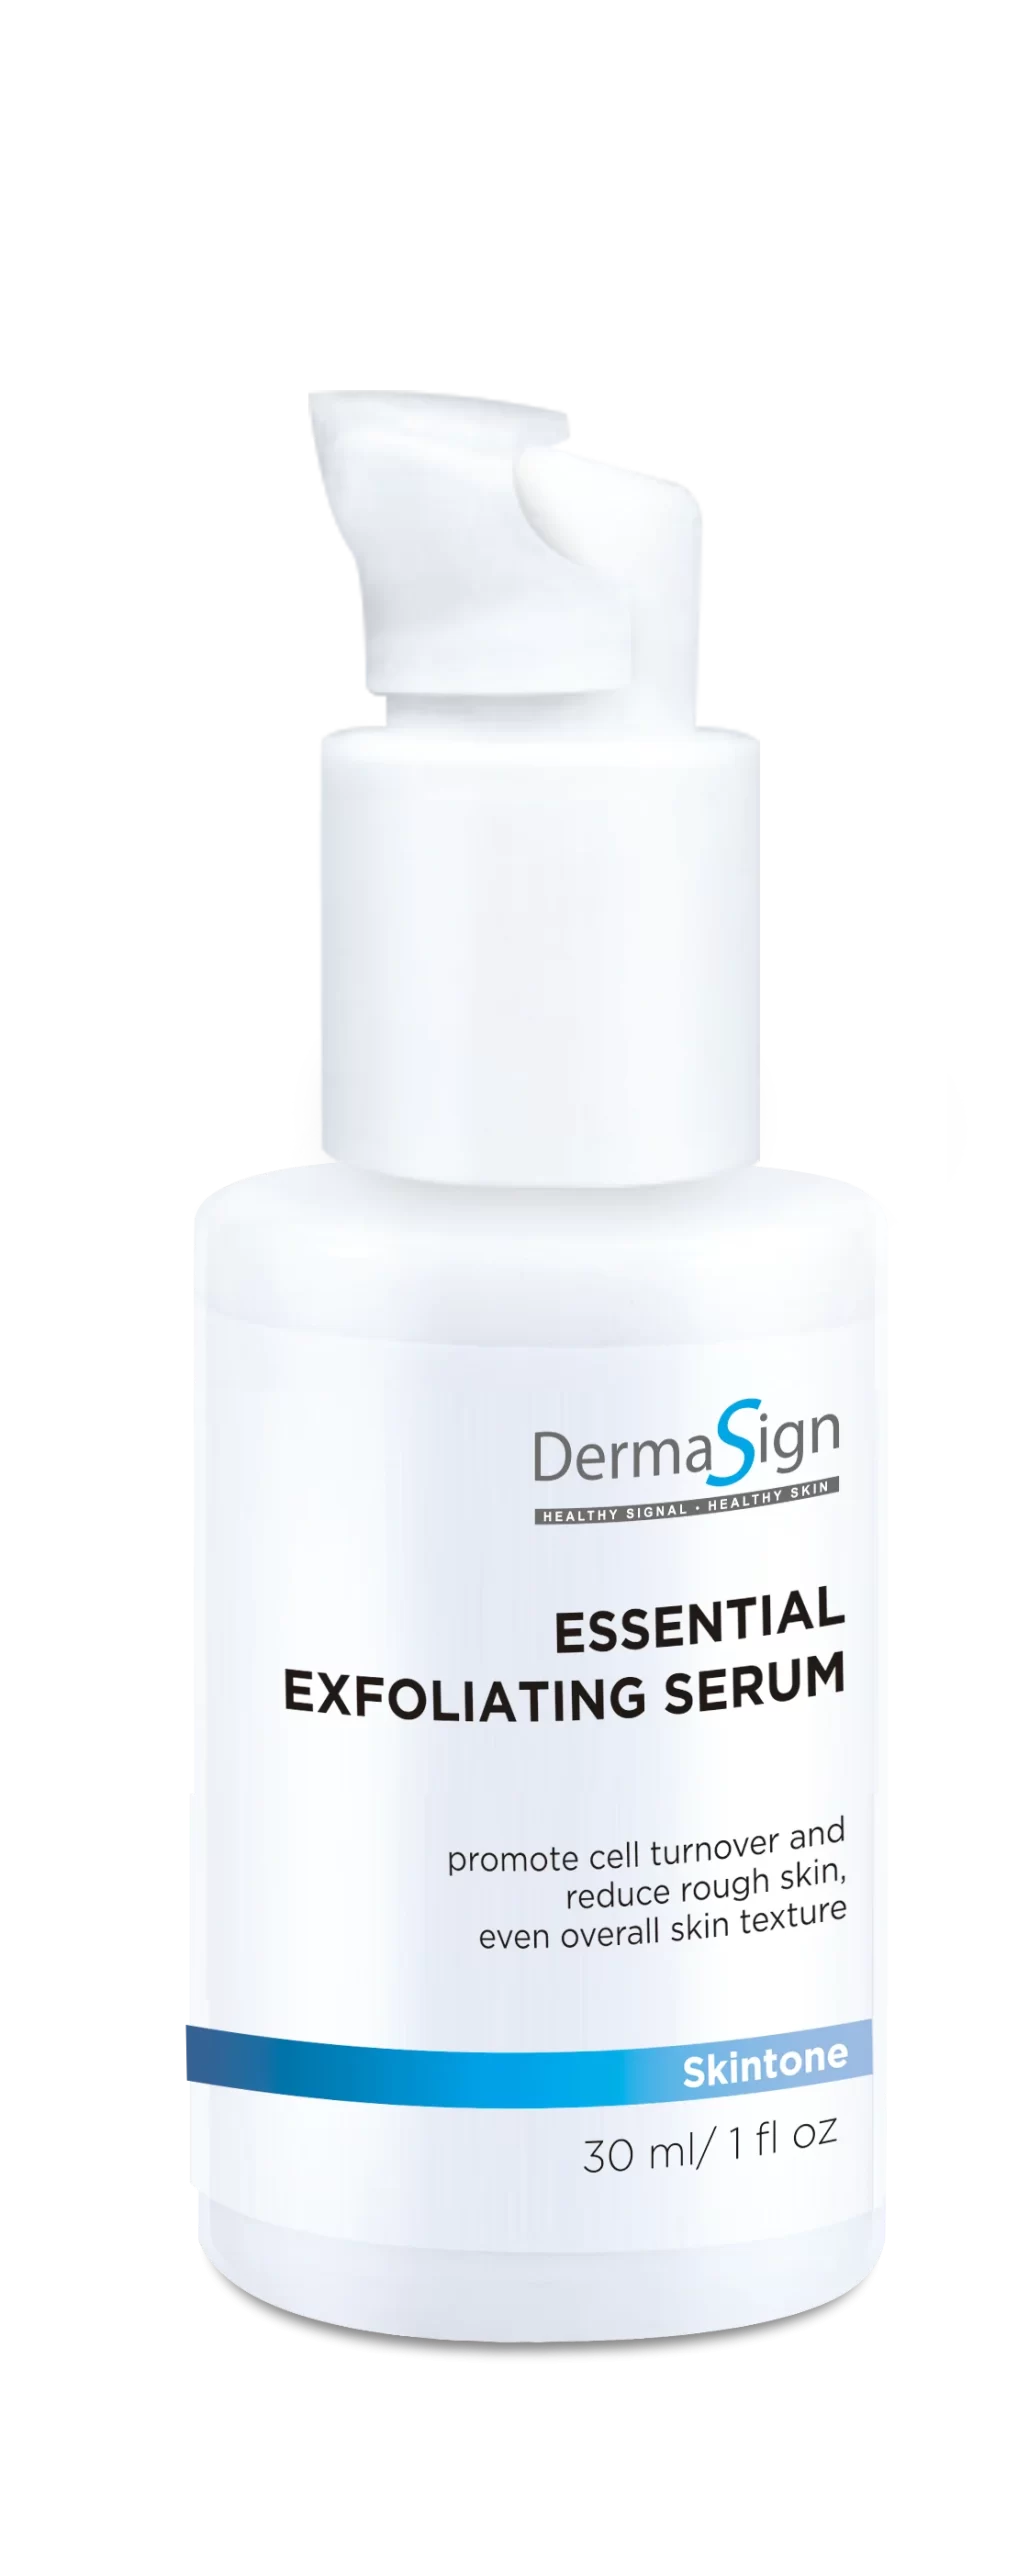 DermaSign 煥膚袪印亮白精華 (Essential Exfoliating Serum)